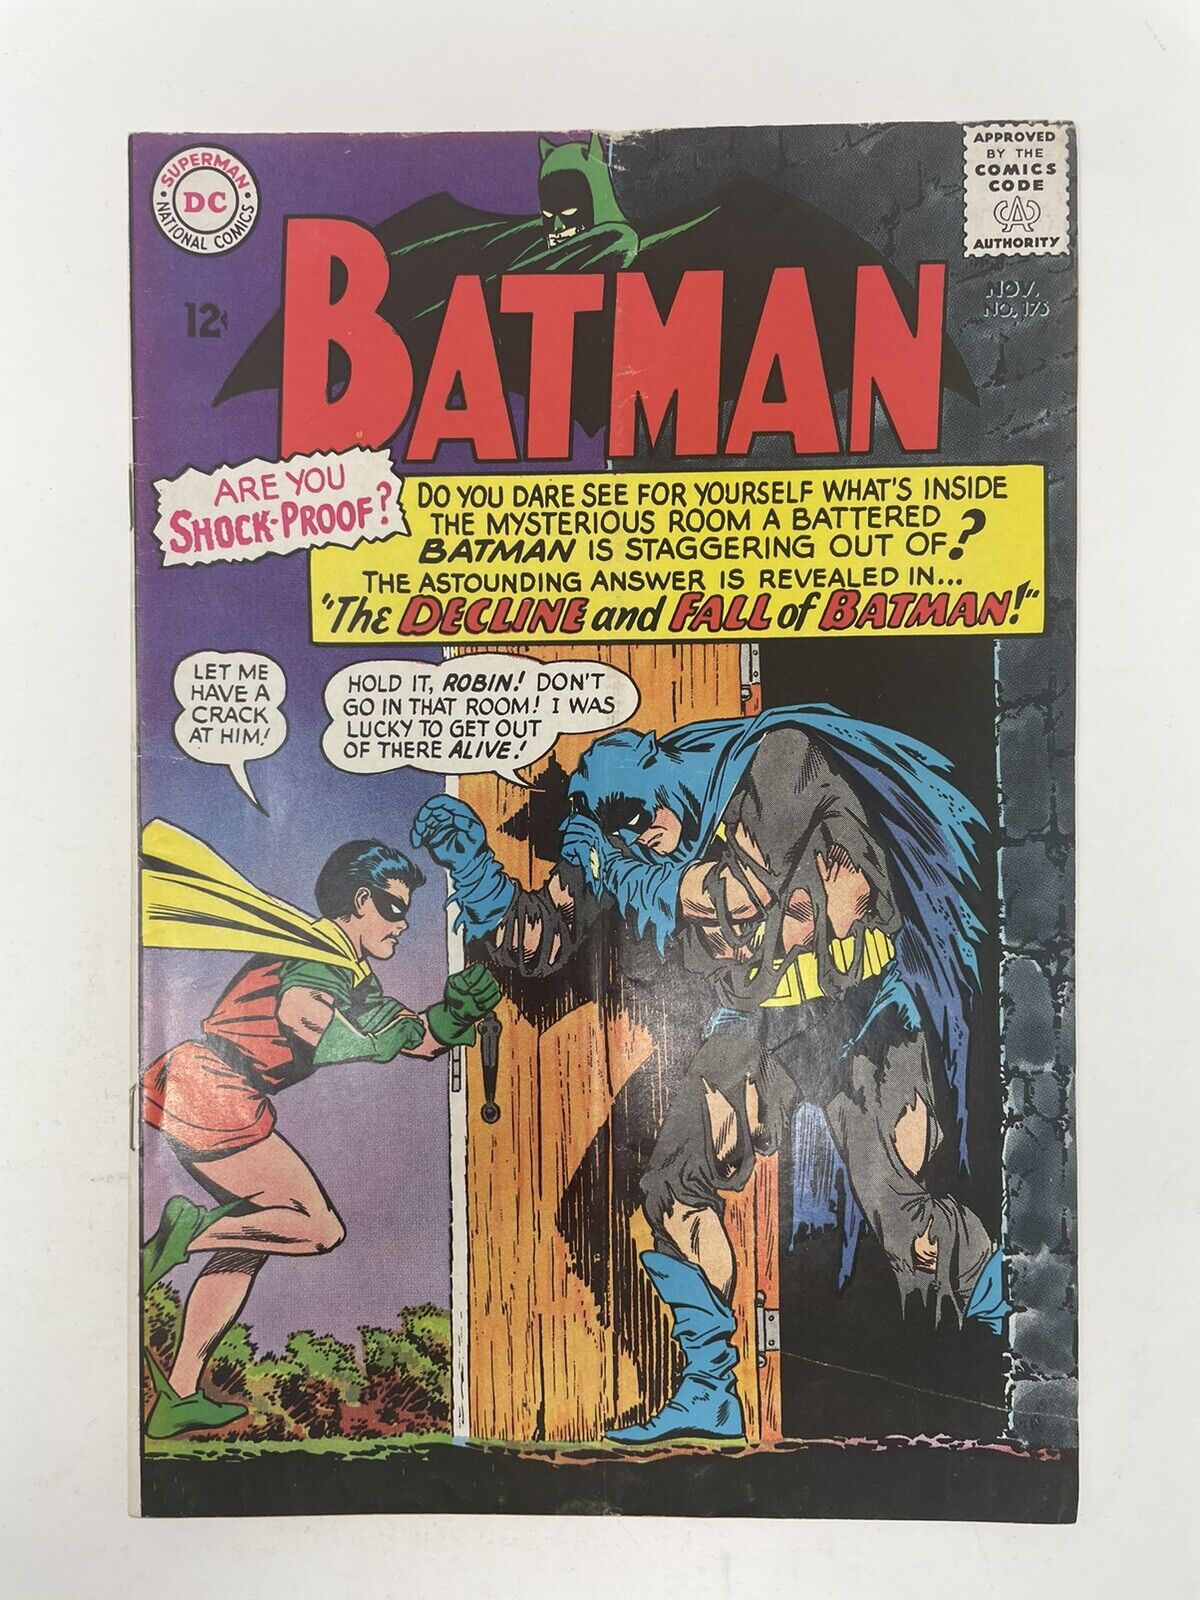 Batman #175 DC Comics 1965 Decline and Fall of Batman DCEU Silver Age Joker